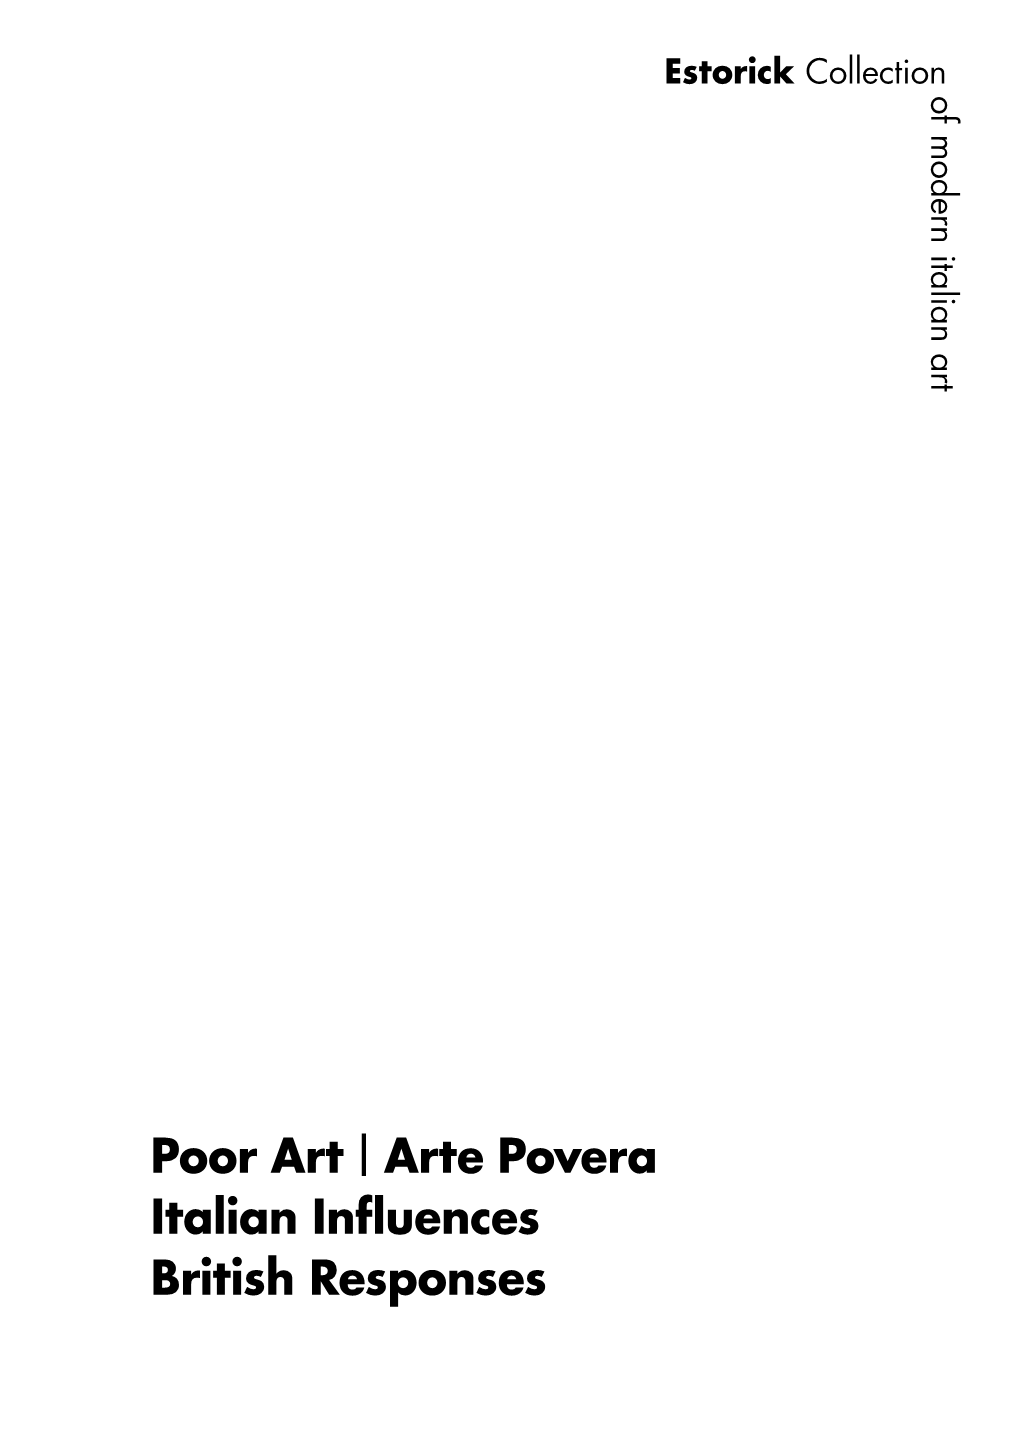 Poor Art / Arte Povera